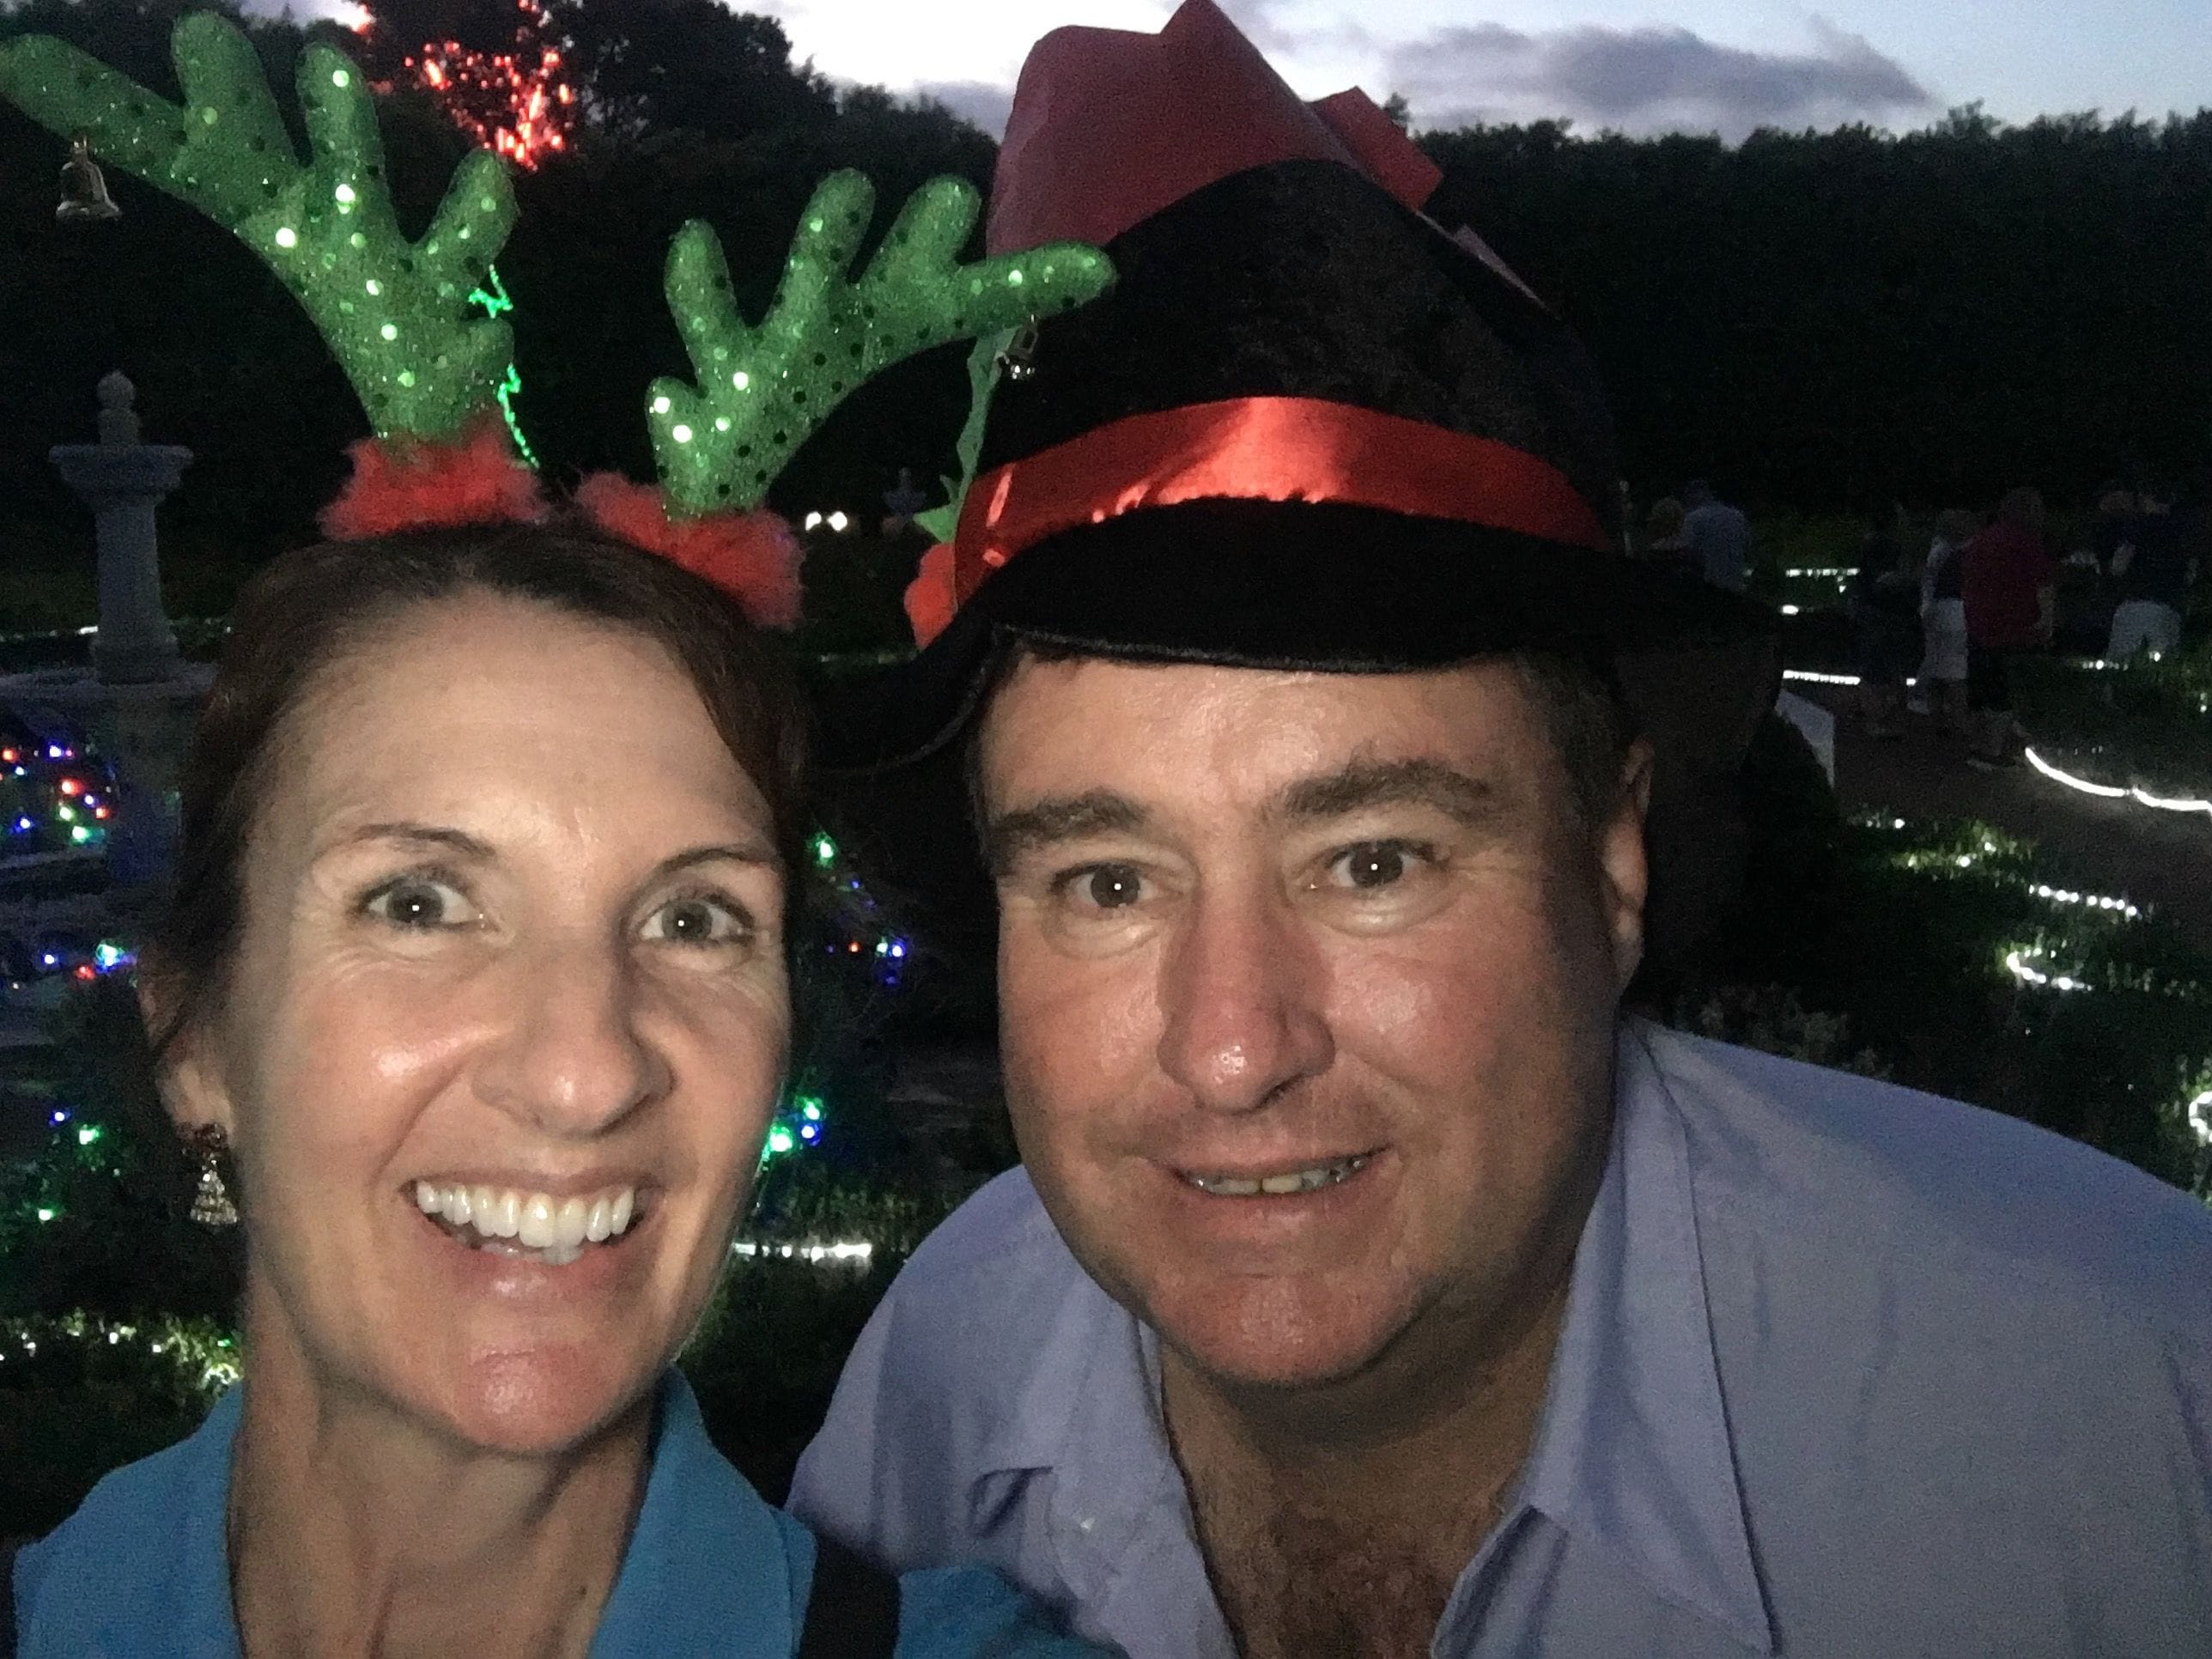 Hunter Valley Gardens Christmas Lights 2018-2019 Public Day Night Tour Image -5c149f5f5d7eb